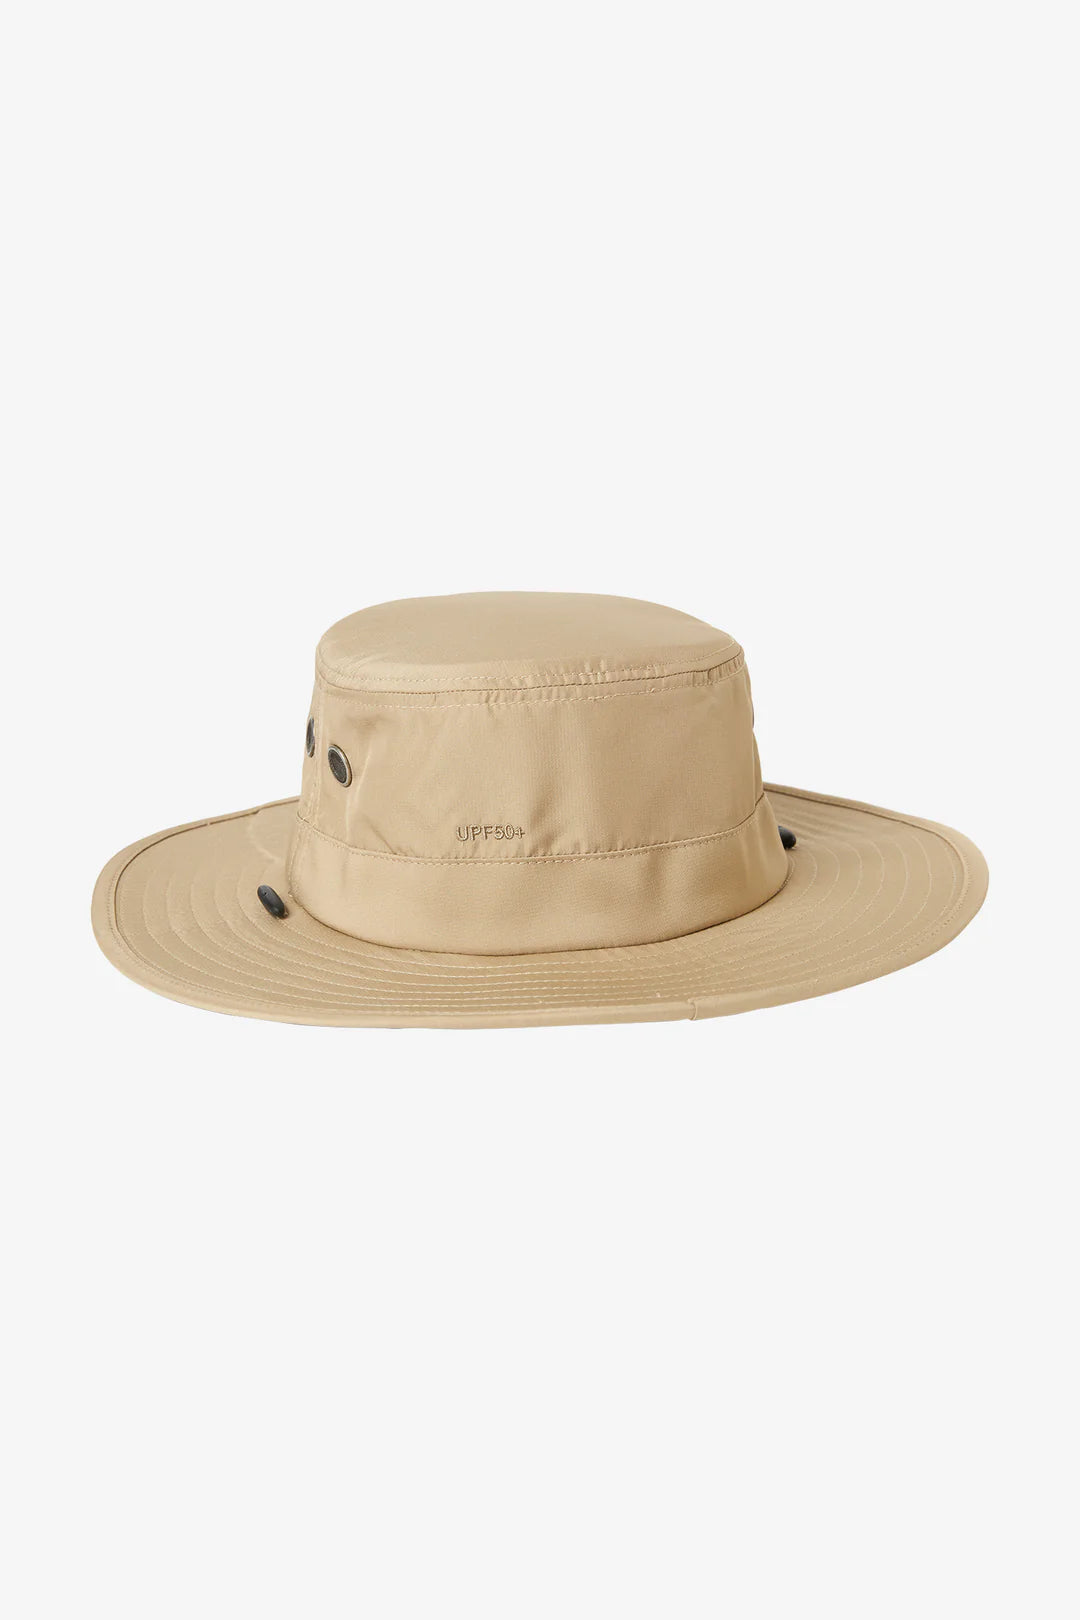 Oneill Men's Lancaster Hat